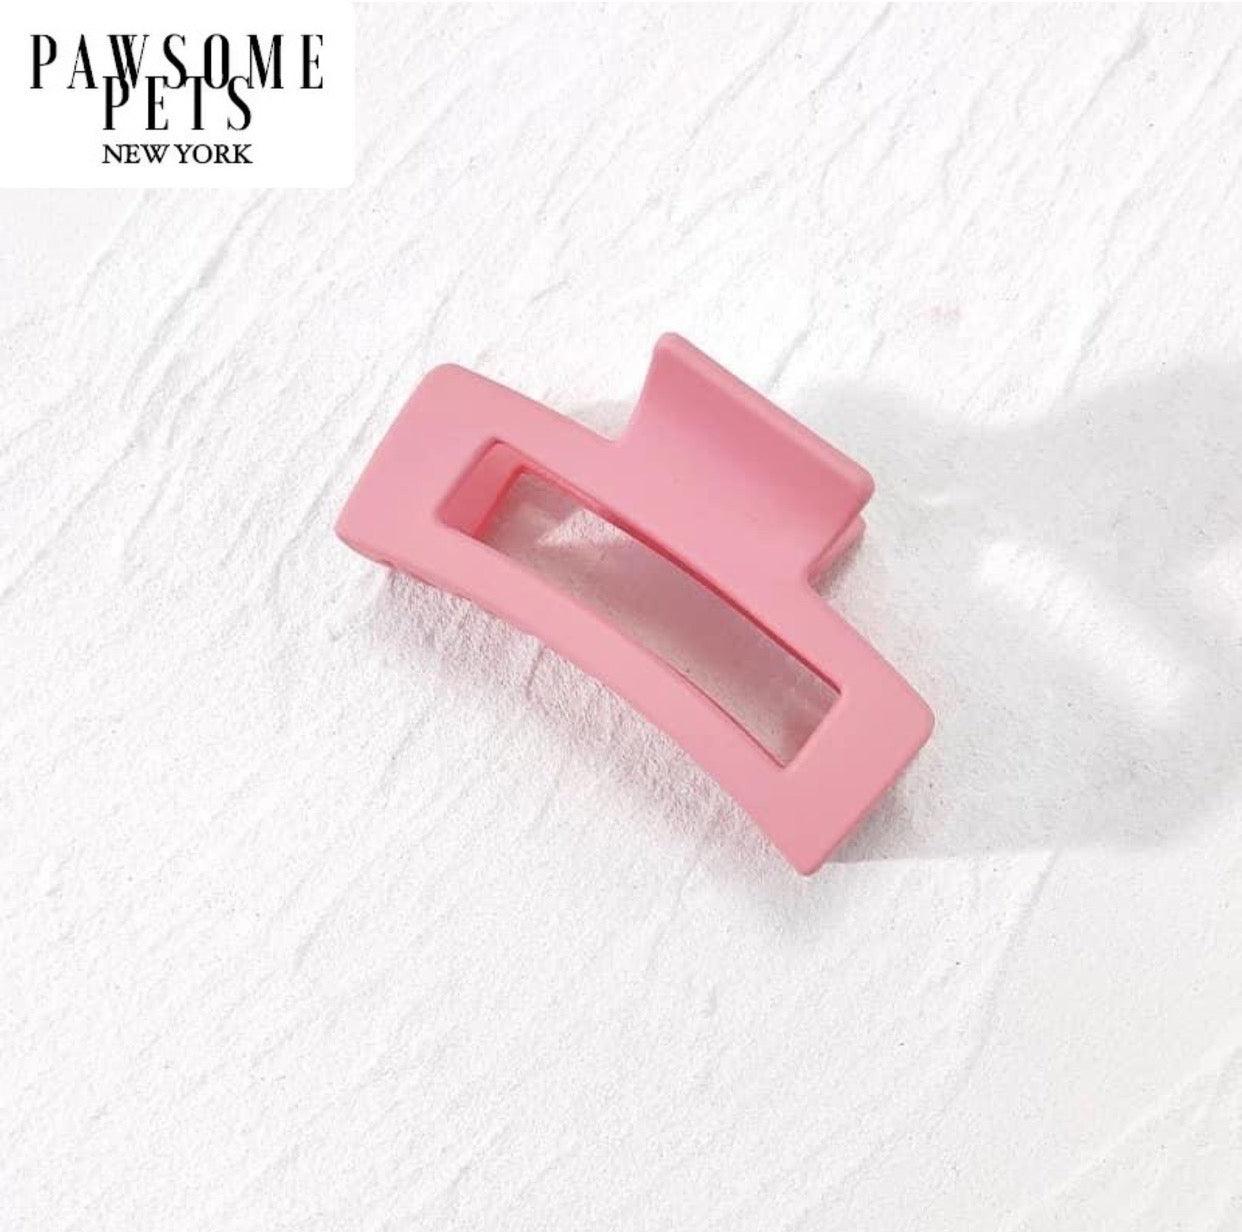 HAIR CLAWS - ROSE PINK - Pawsomepetsnewyork